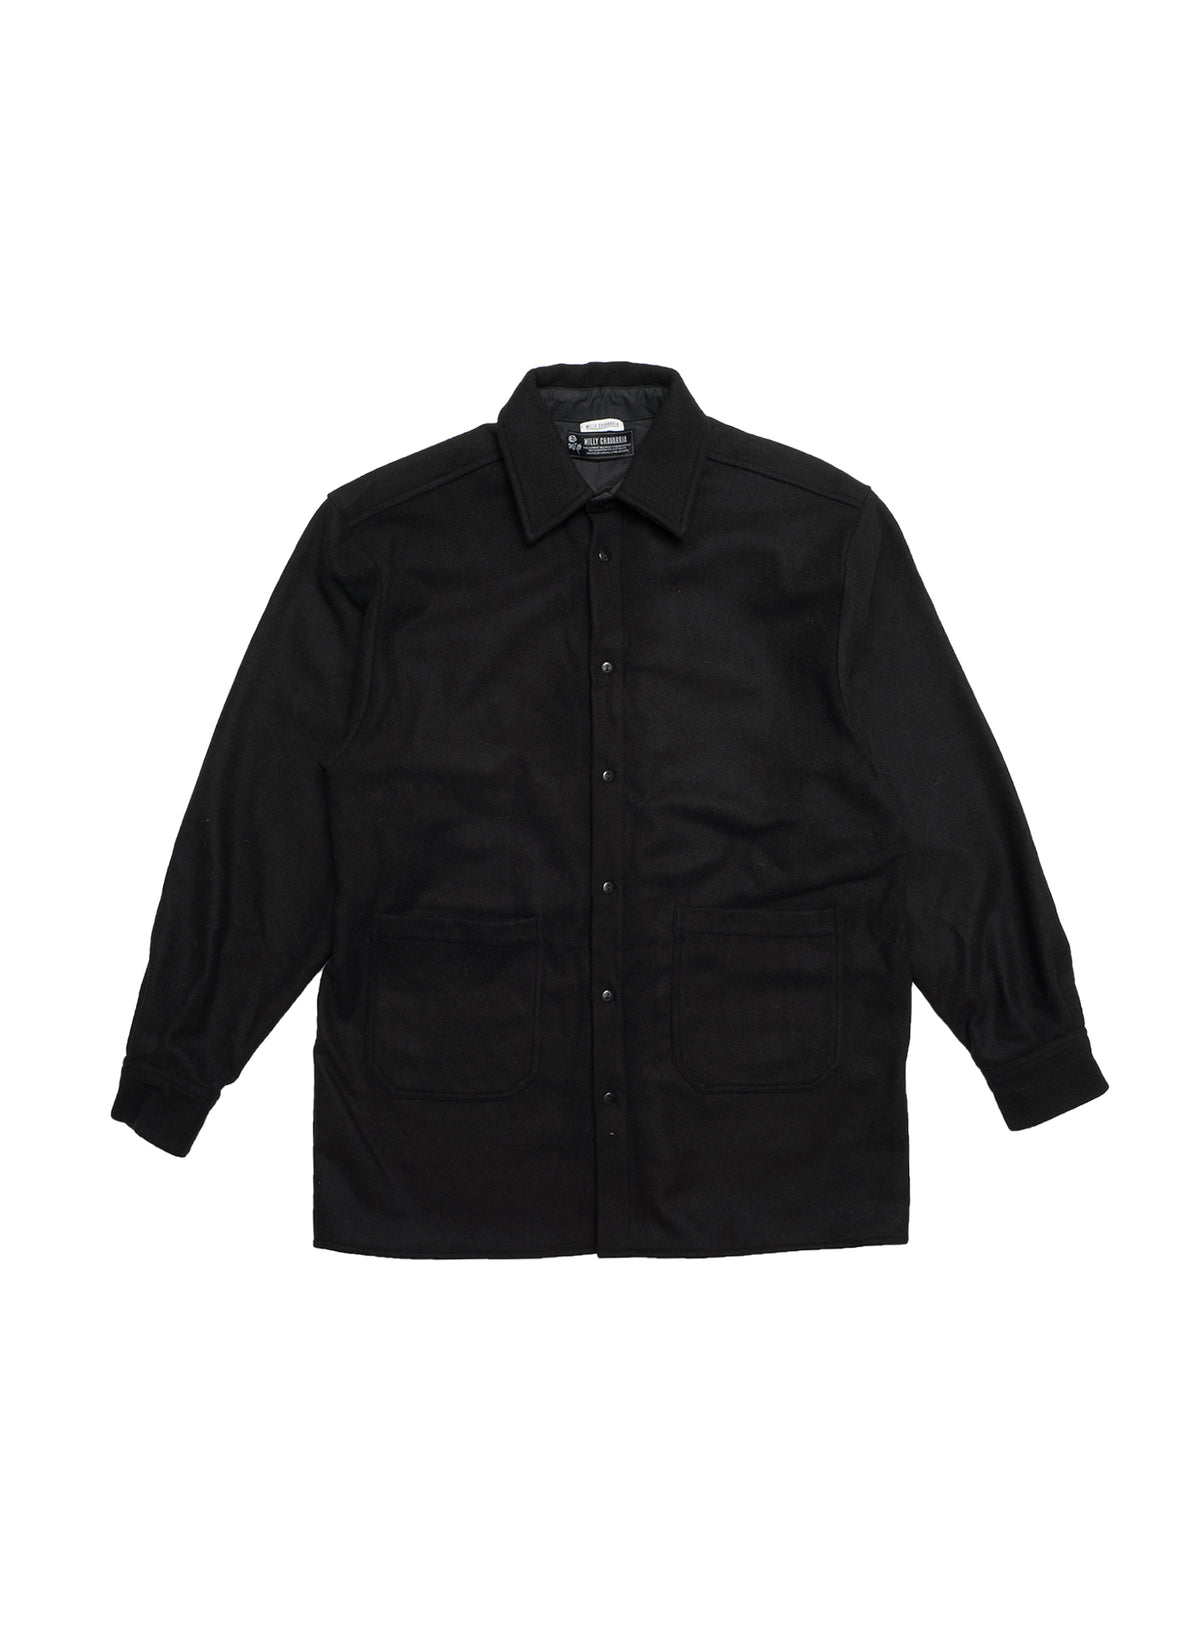 WILLY CHAVARRIA / Porterville Shirt BLACK